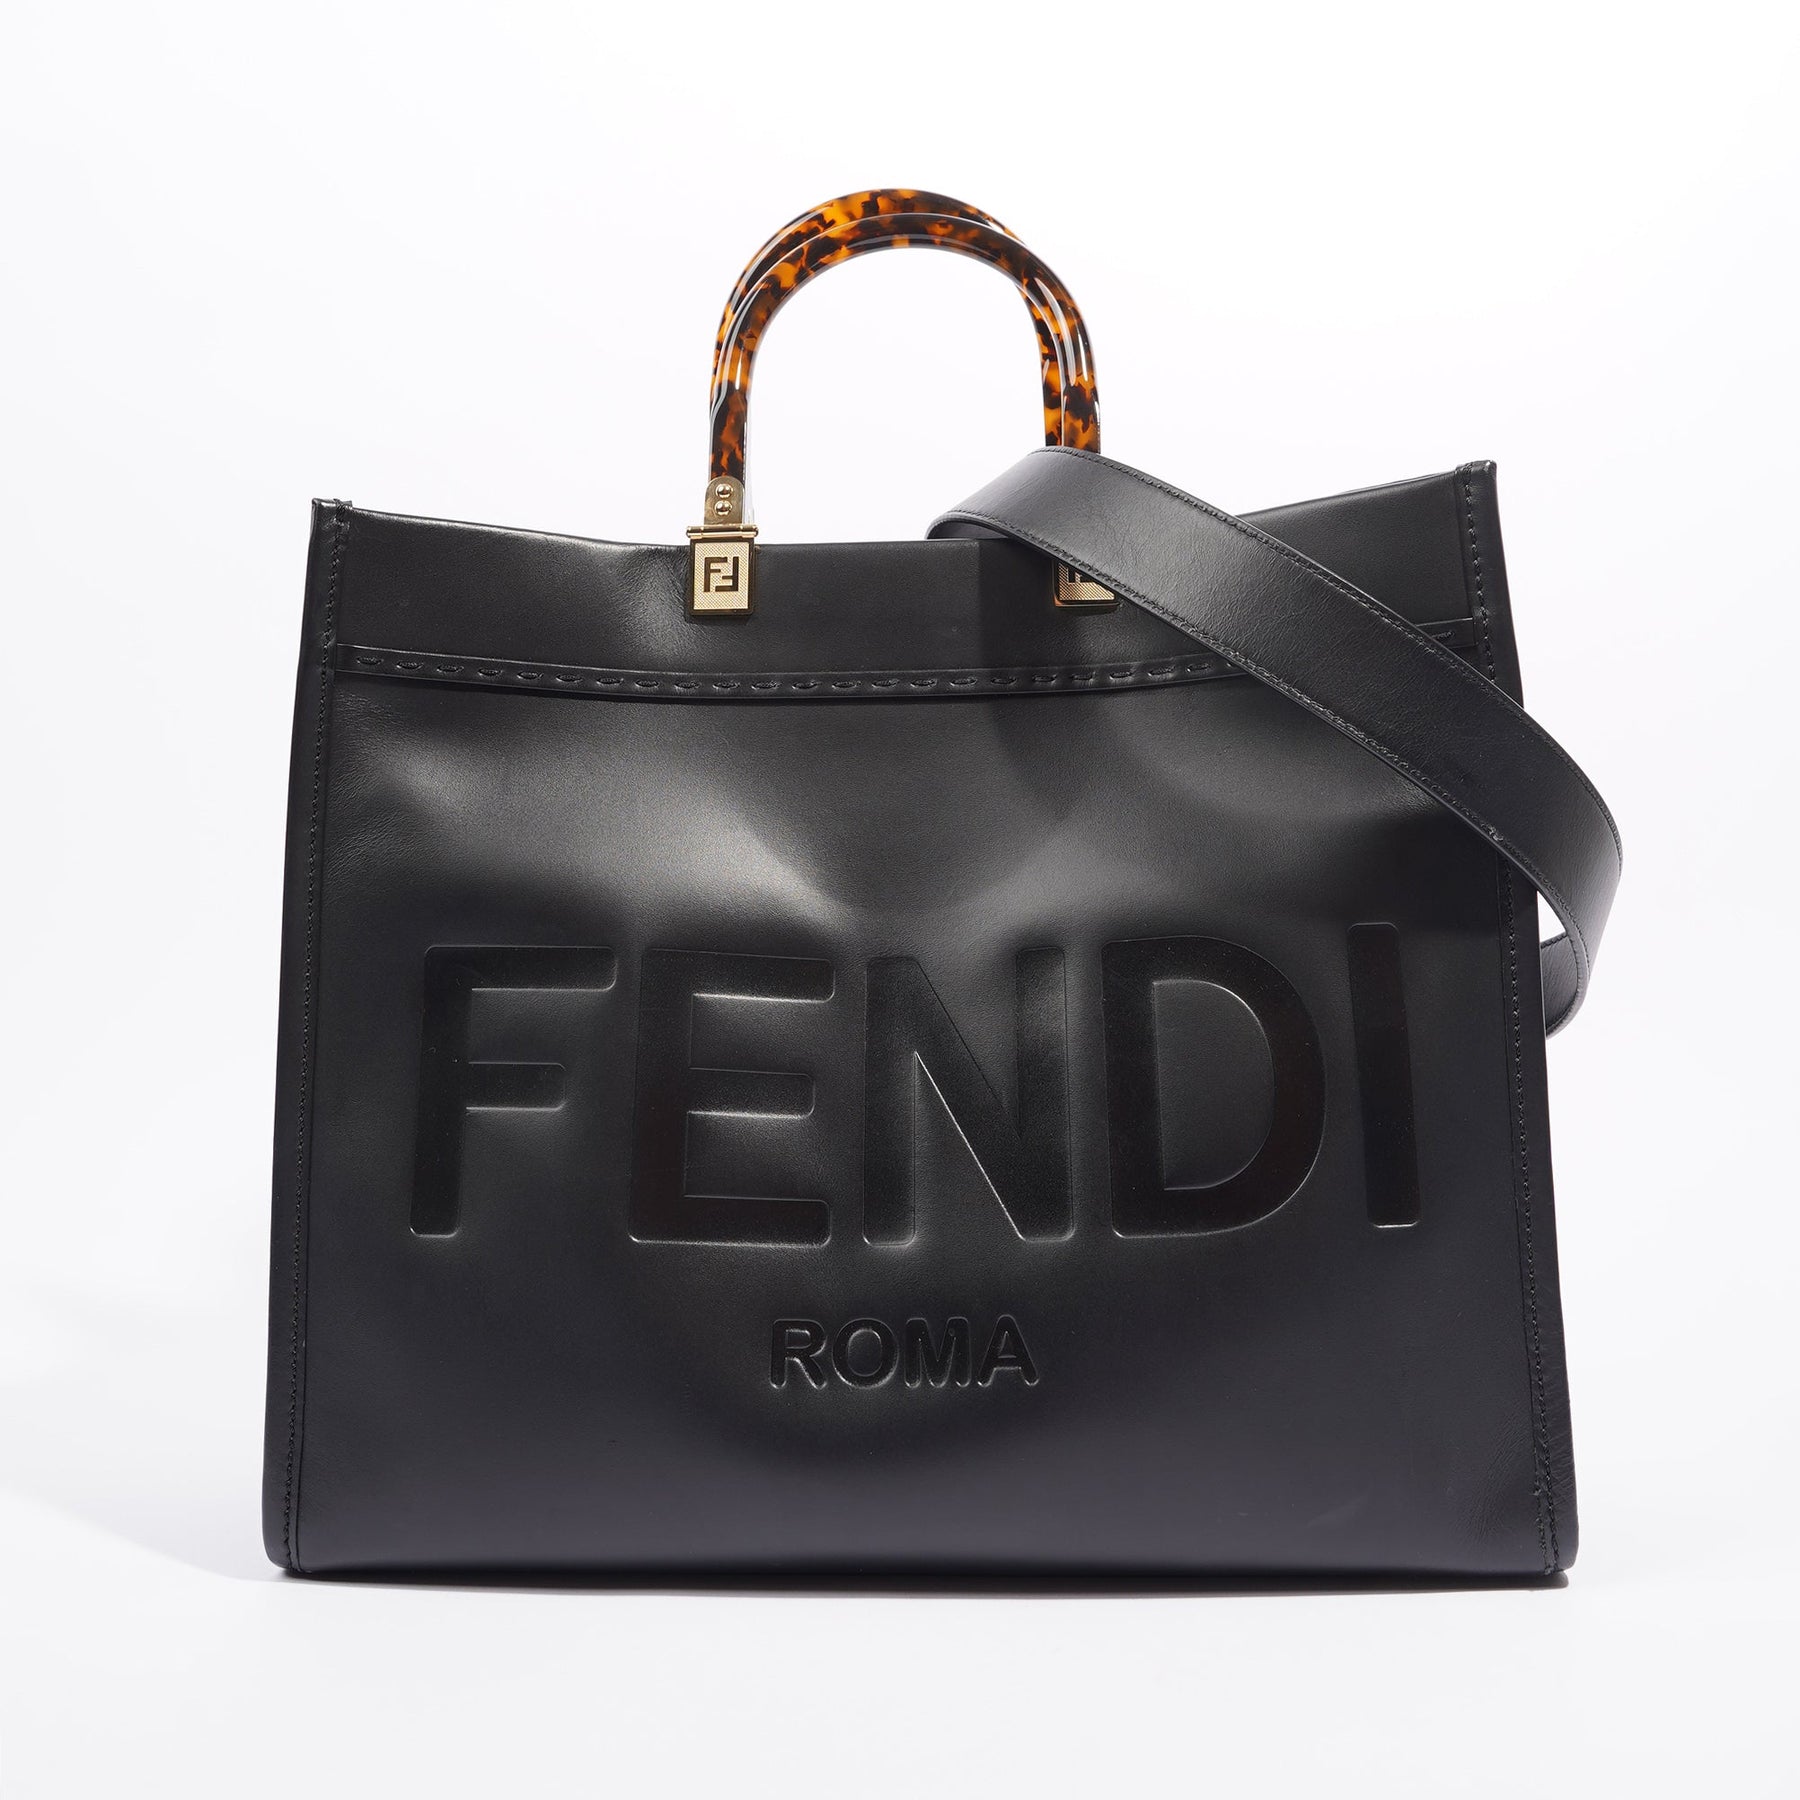 Fendi Fendi tote bag ladies brown leather bag handle India | Ubuy